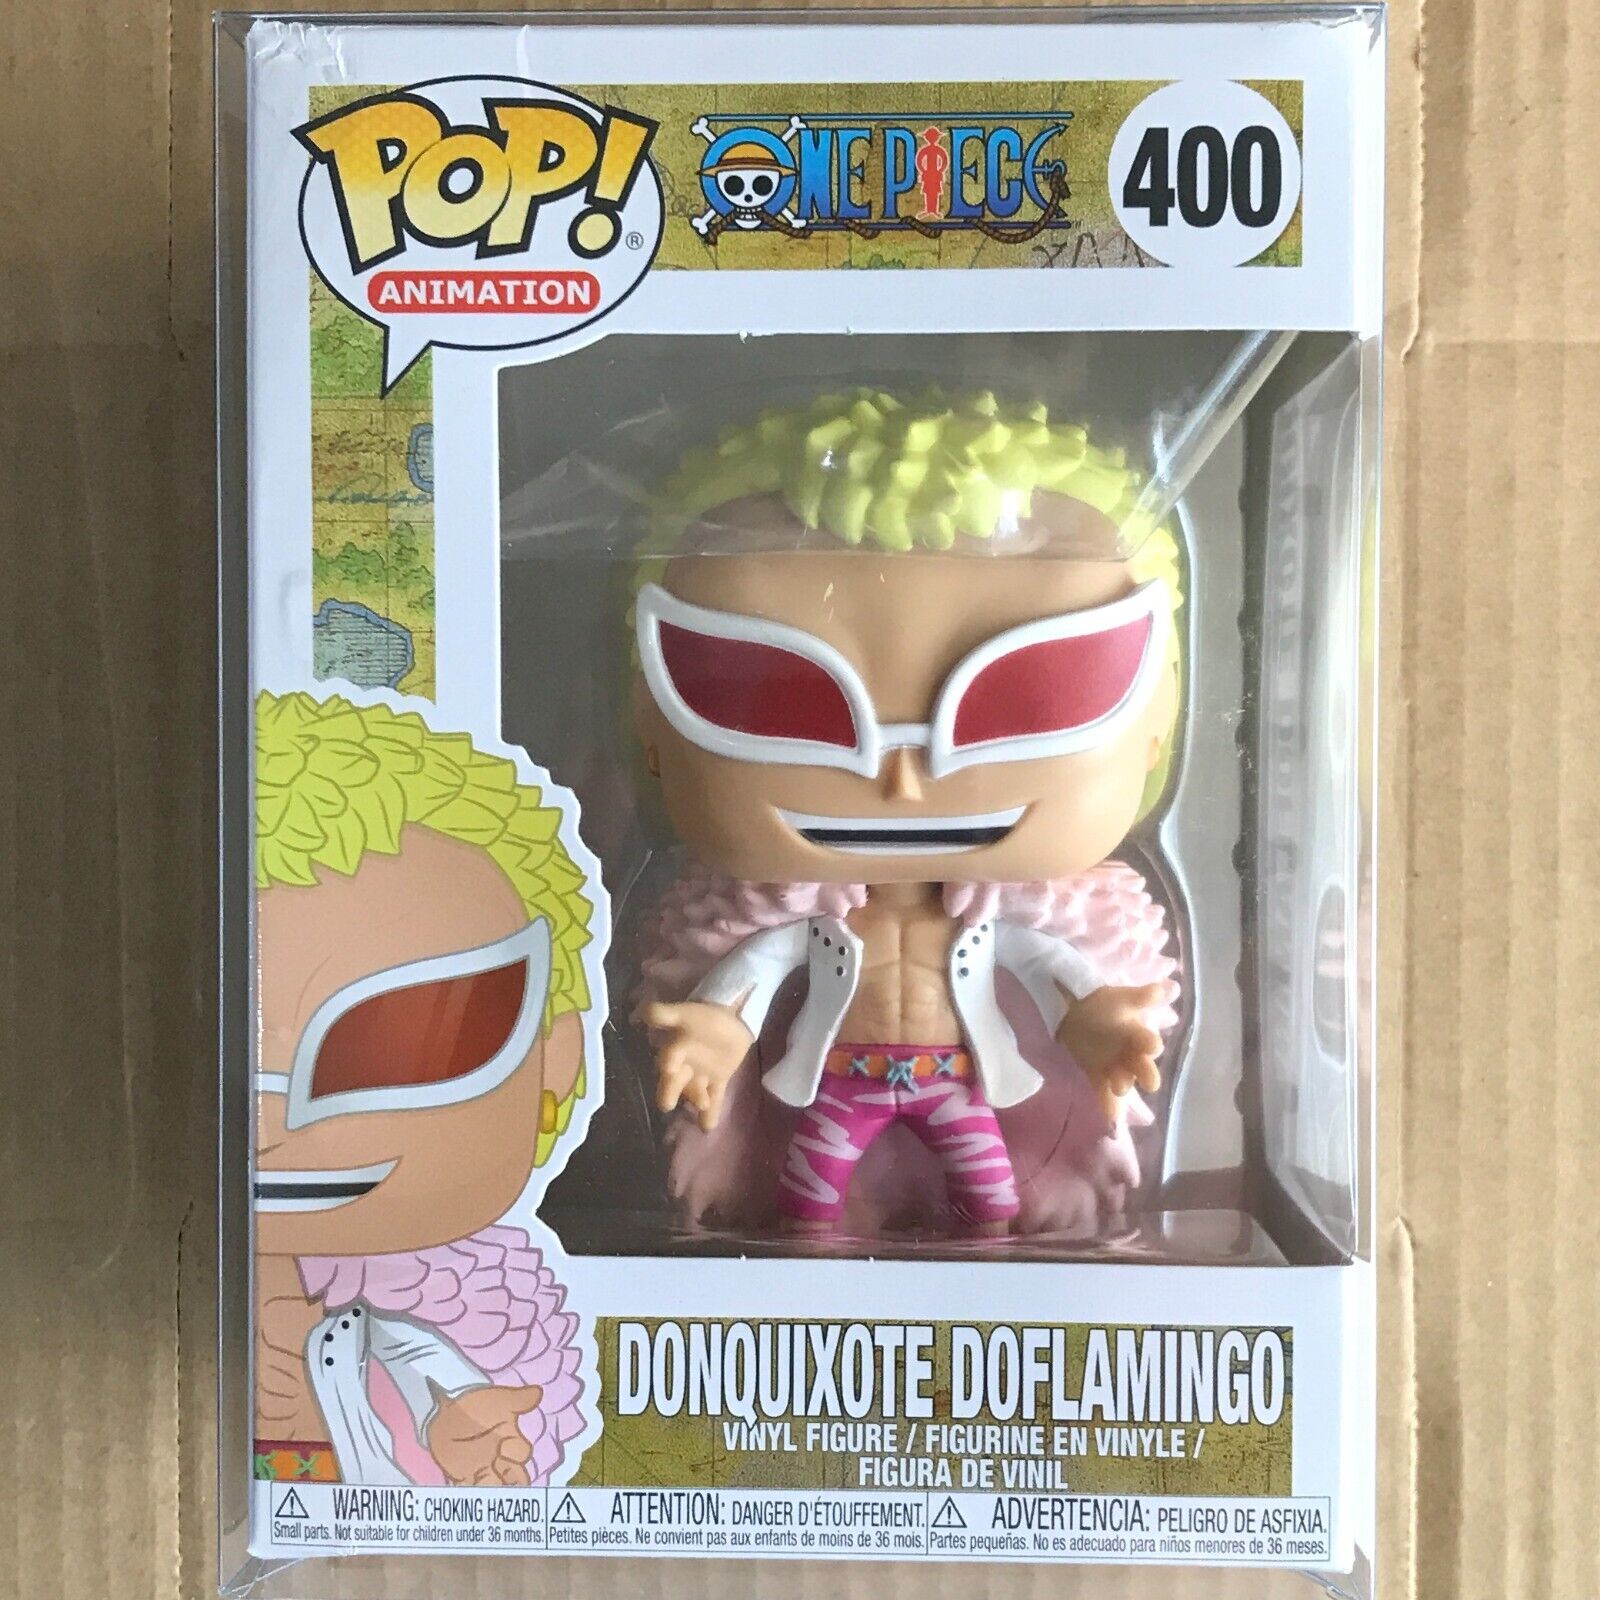 Funko Pop Donquixote Doflamingo #400, One Piece, Animation, Anime